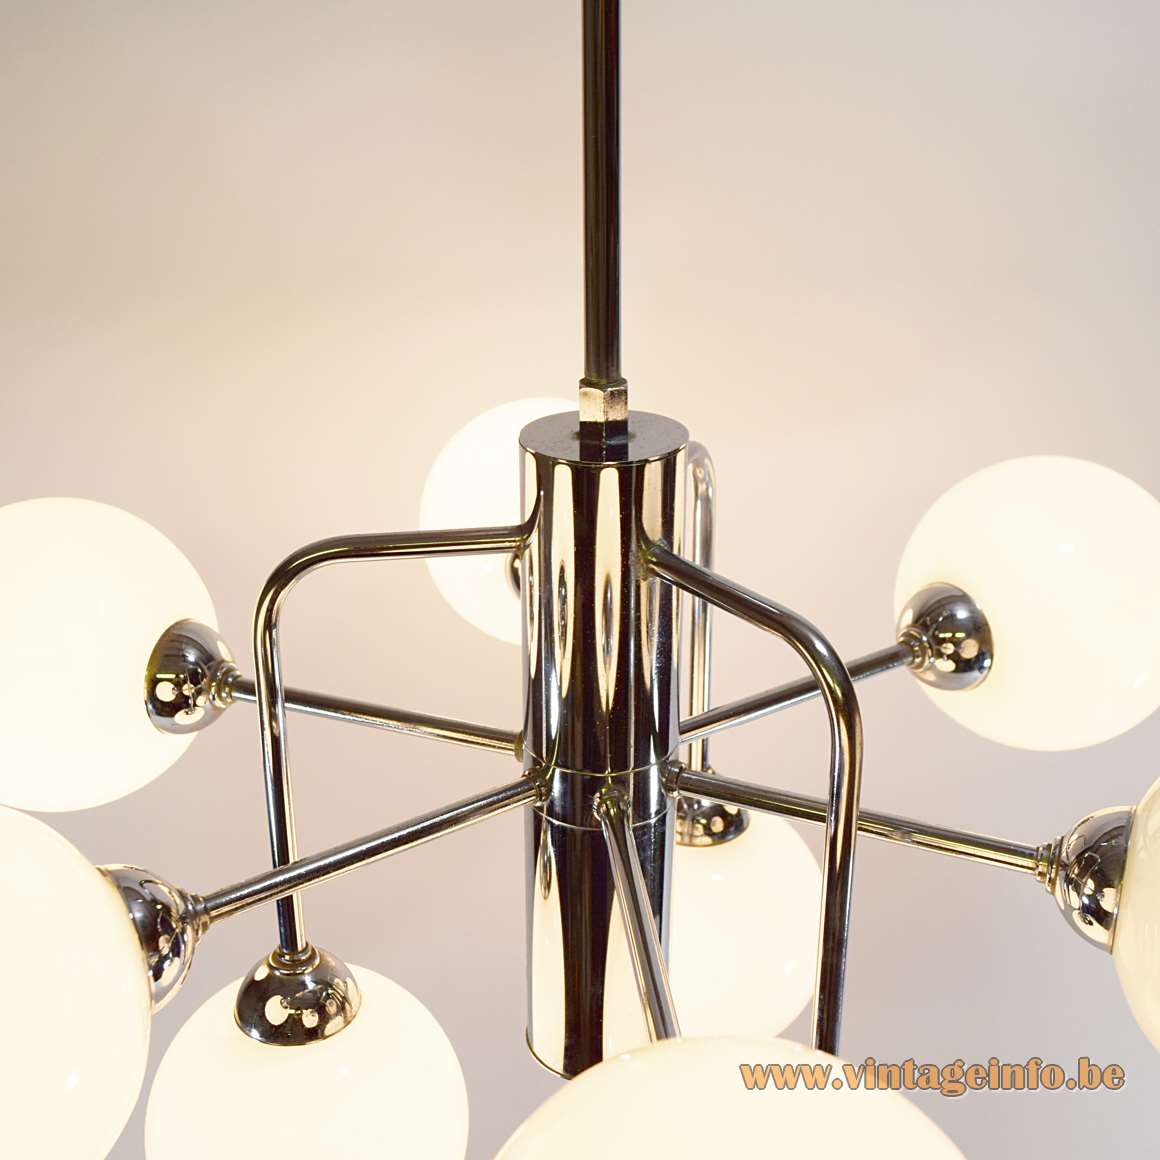 Atomic Globes Chandelier - Sptunik lamp made by Massive Belgium